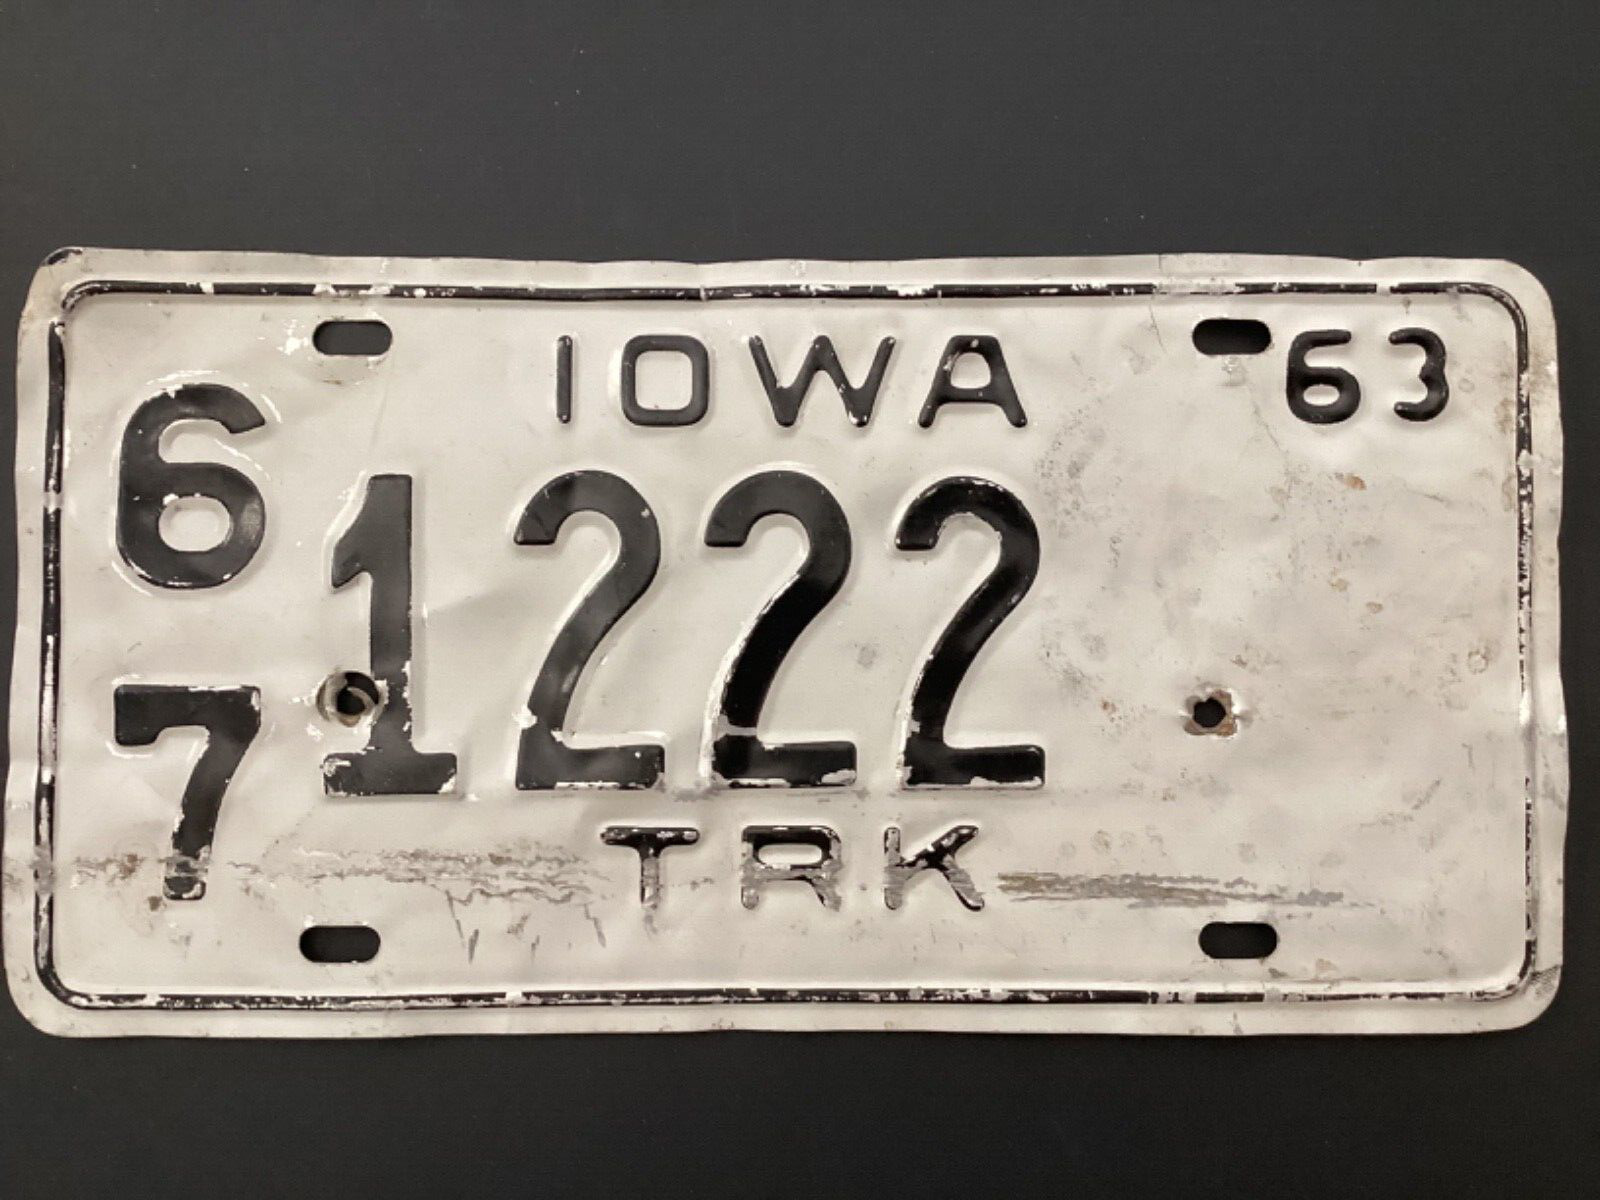 Vintage Iowa 1963 License Plate Teuck Plate 67 1222 IA 67 TRK Rustic Man Cave